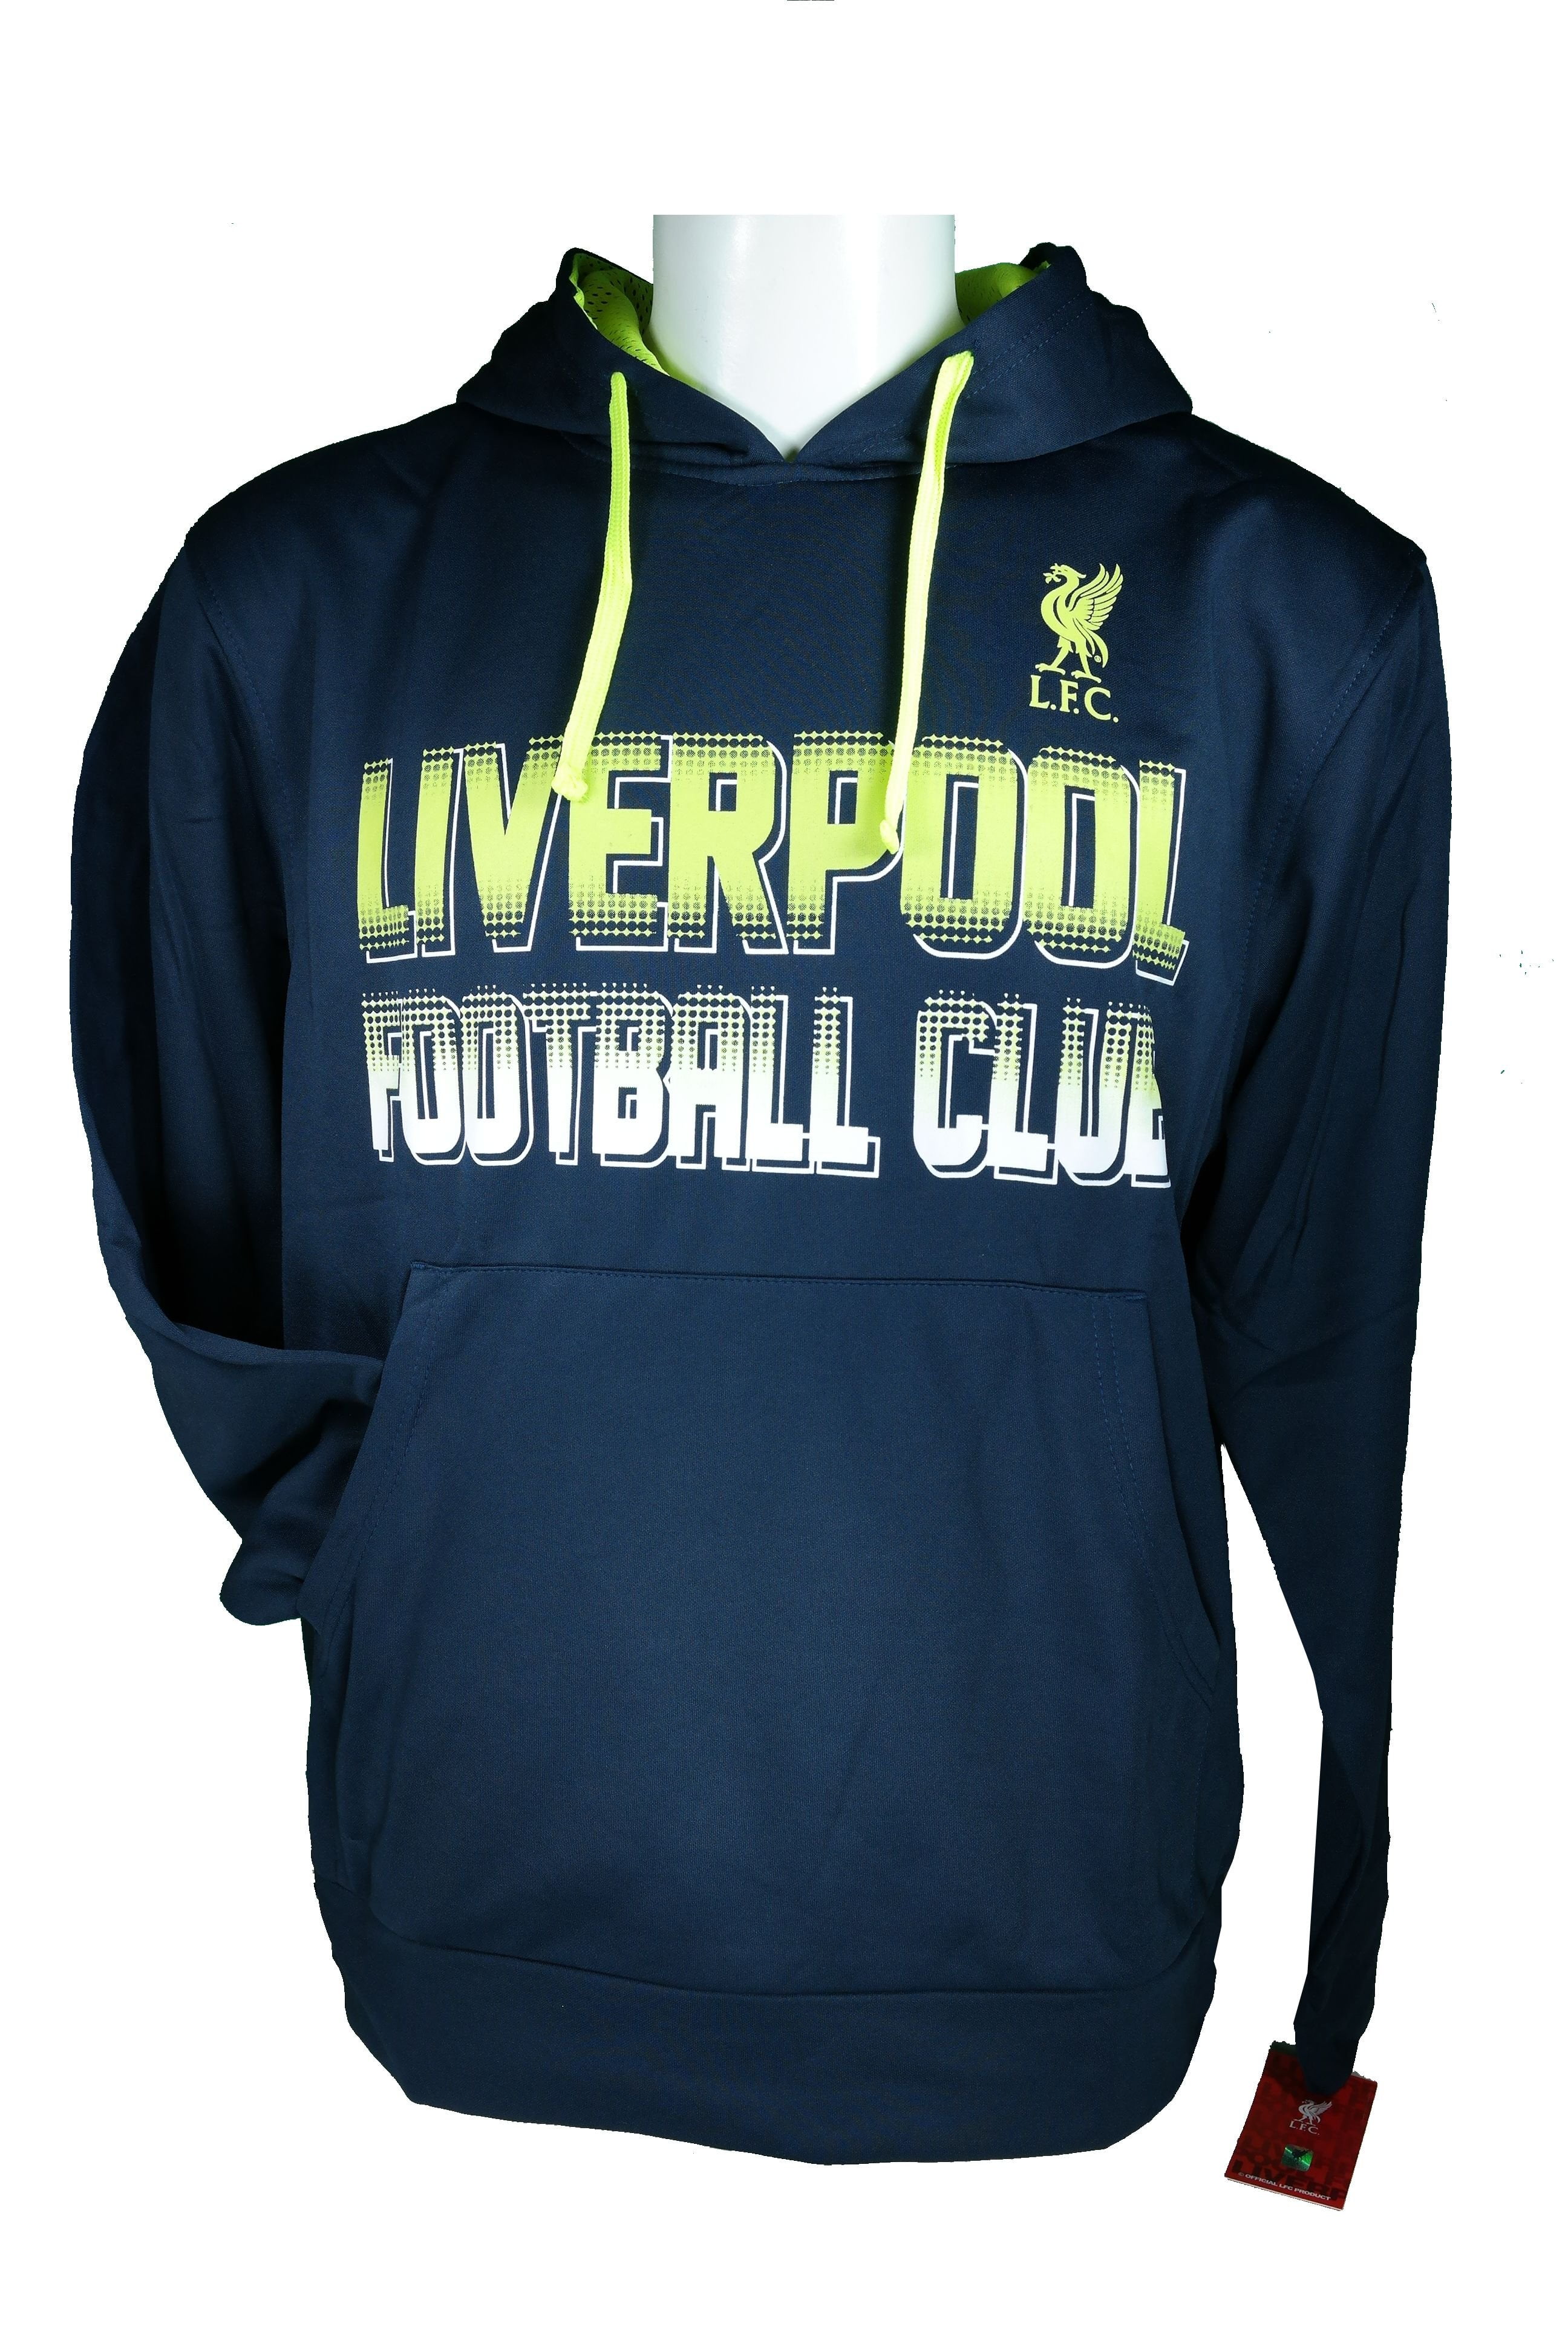 Navy IconSport Liverpool hoodie 